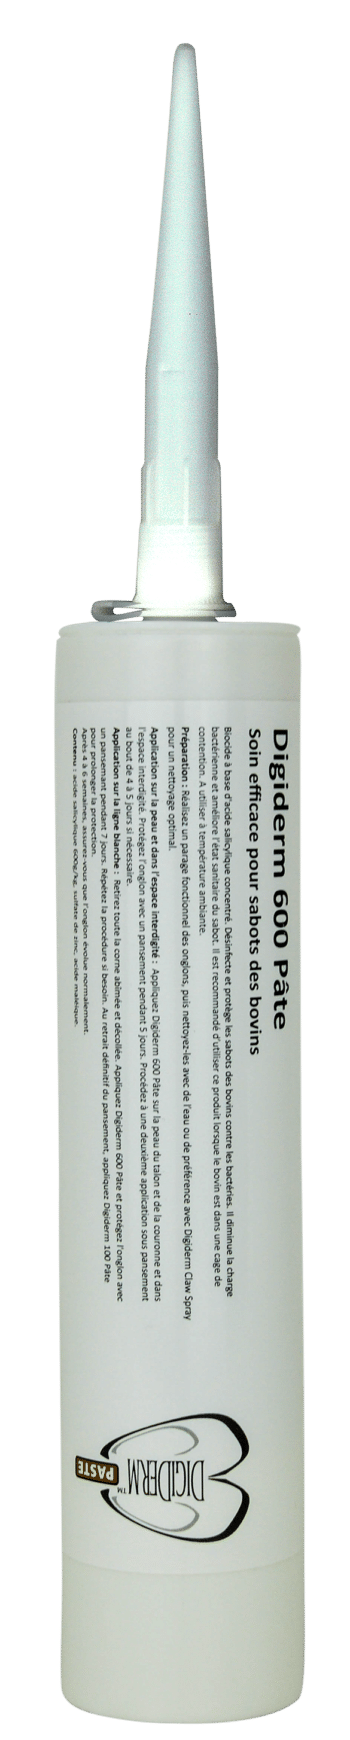 Digiderm-600-pâte-maladie-du-pied-fourchet